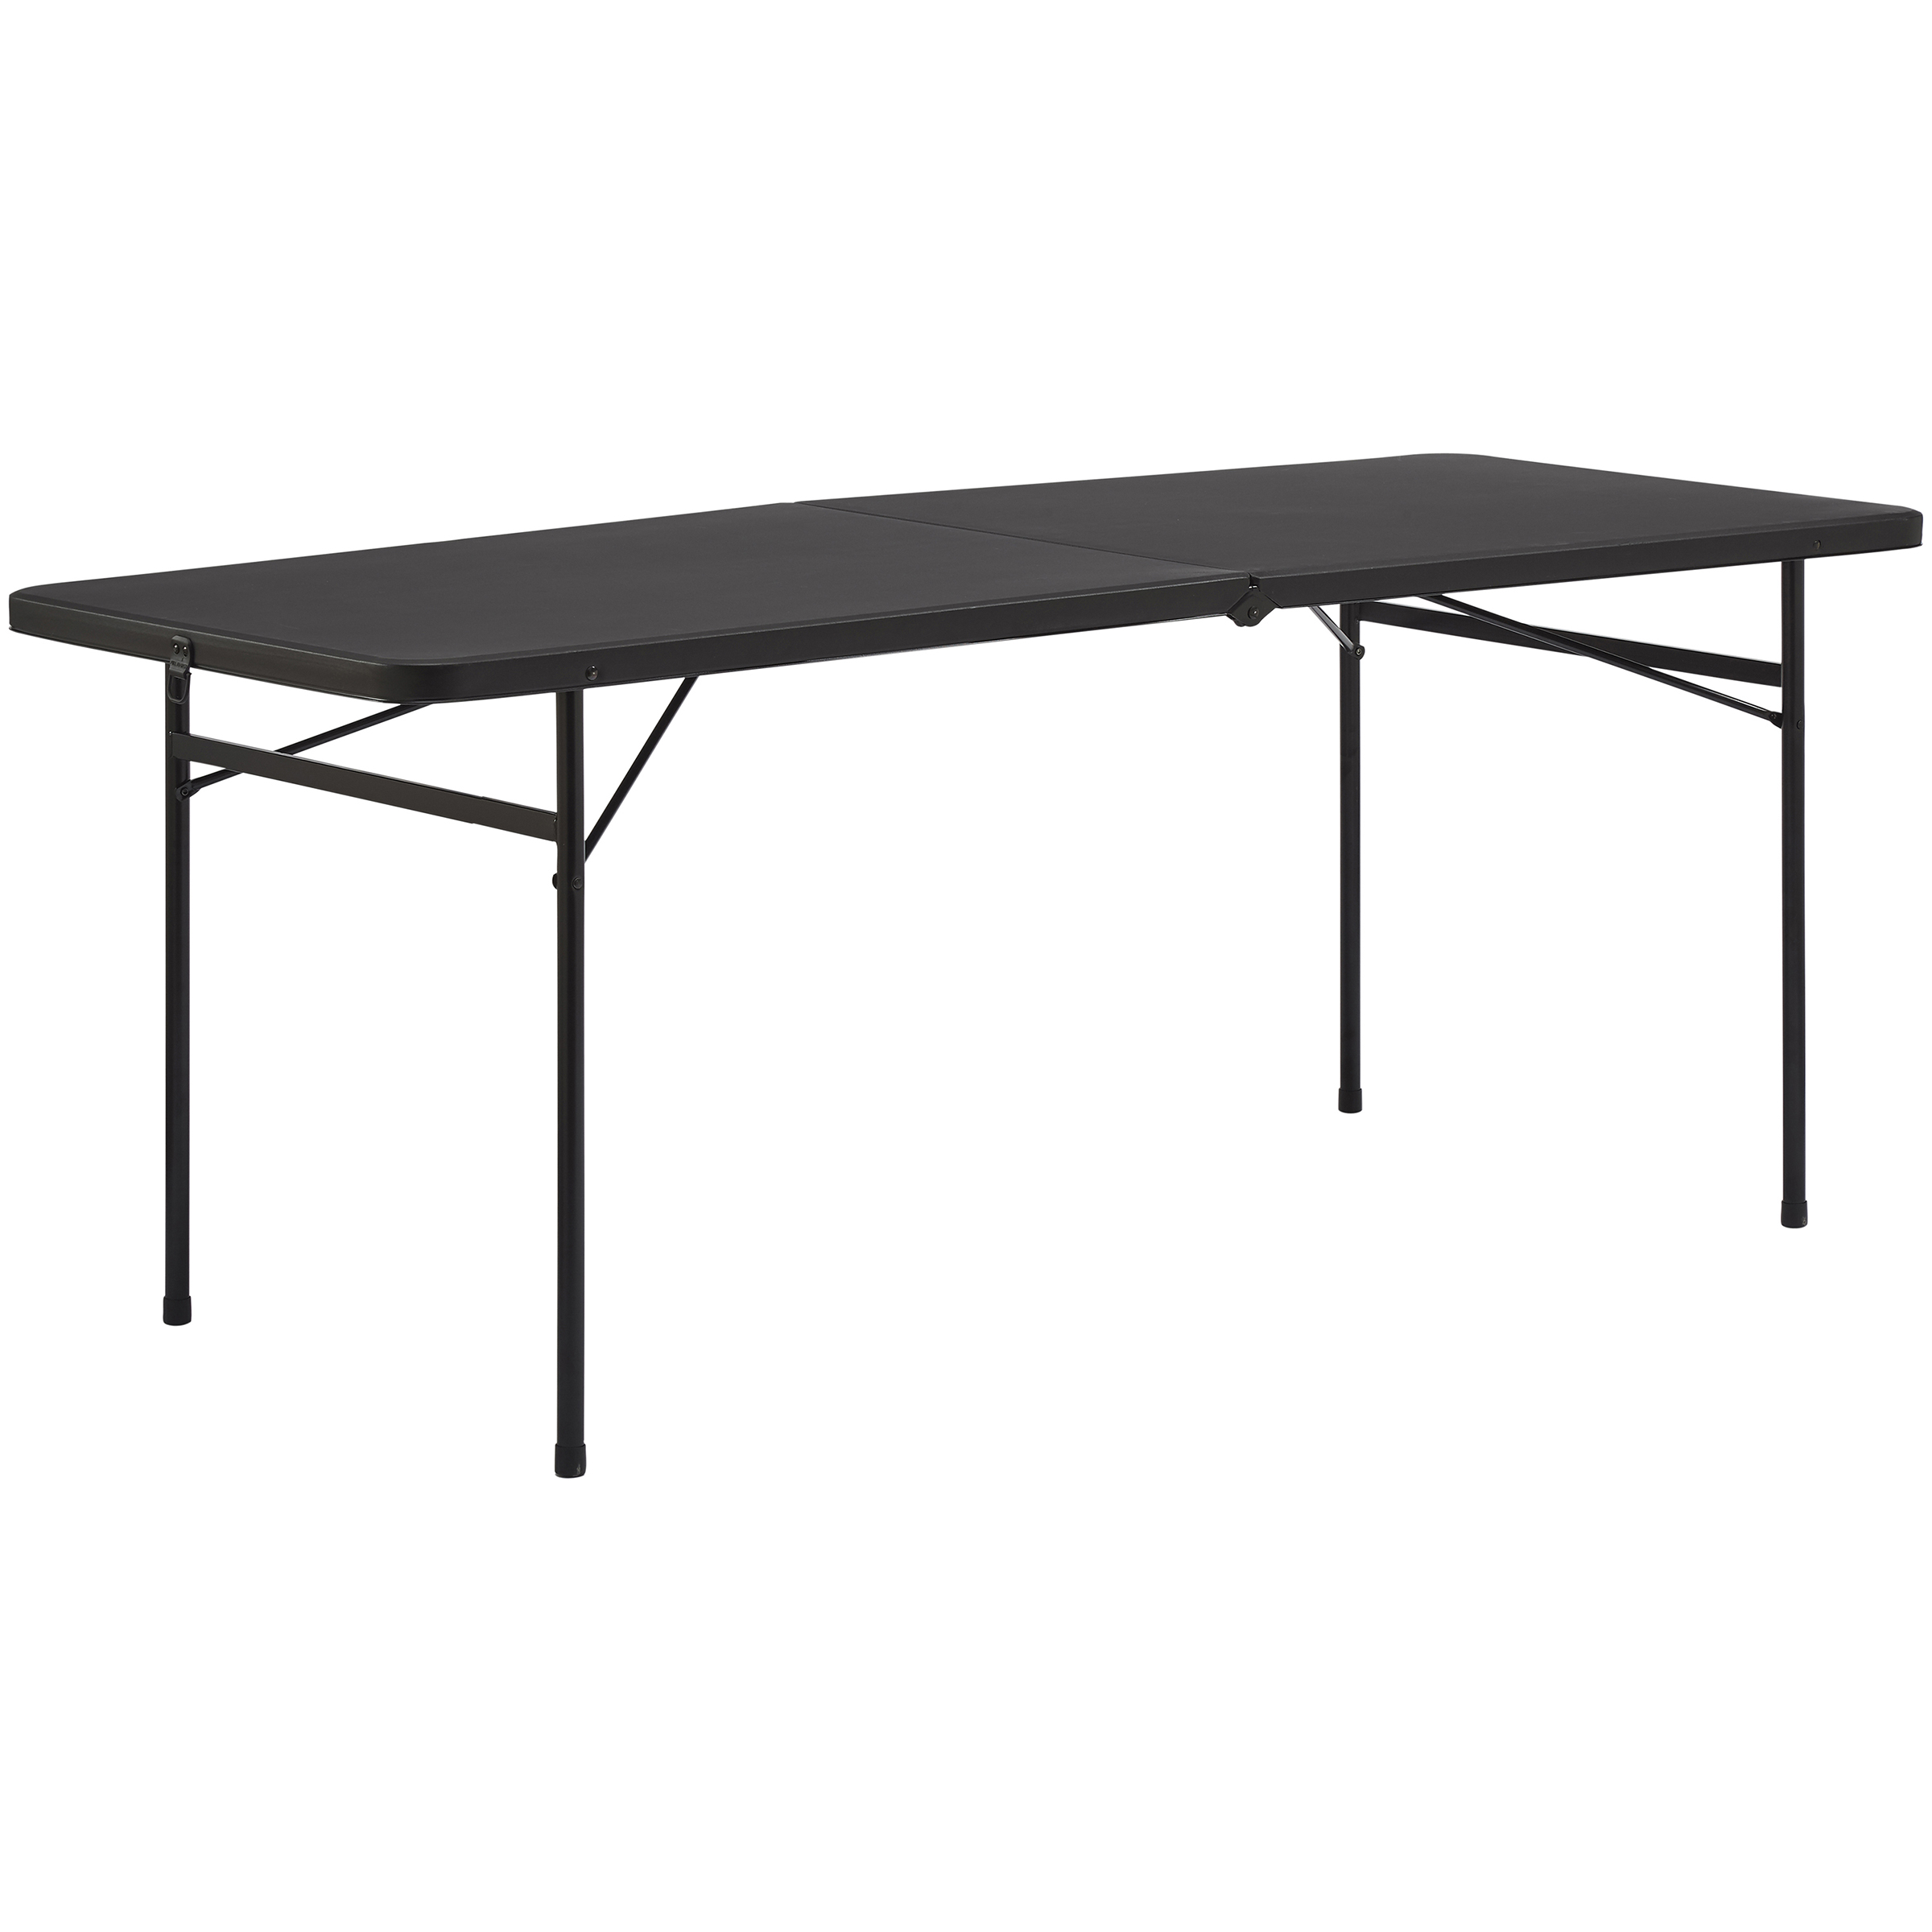 Mainstays 6 Foot Bi-Fold Plastic Folding Table, Black - image 2 of 8